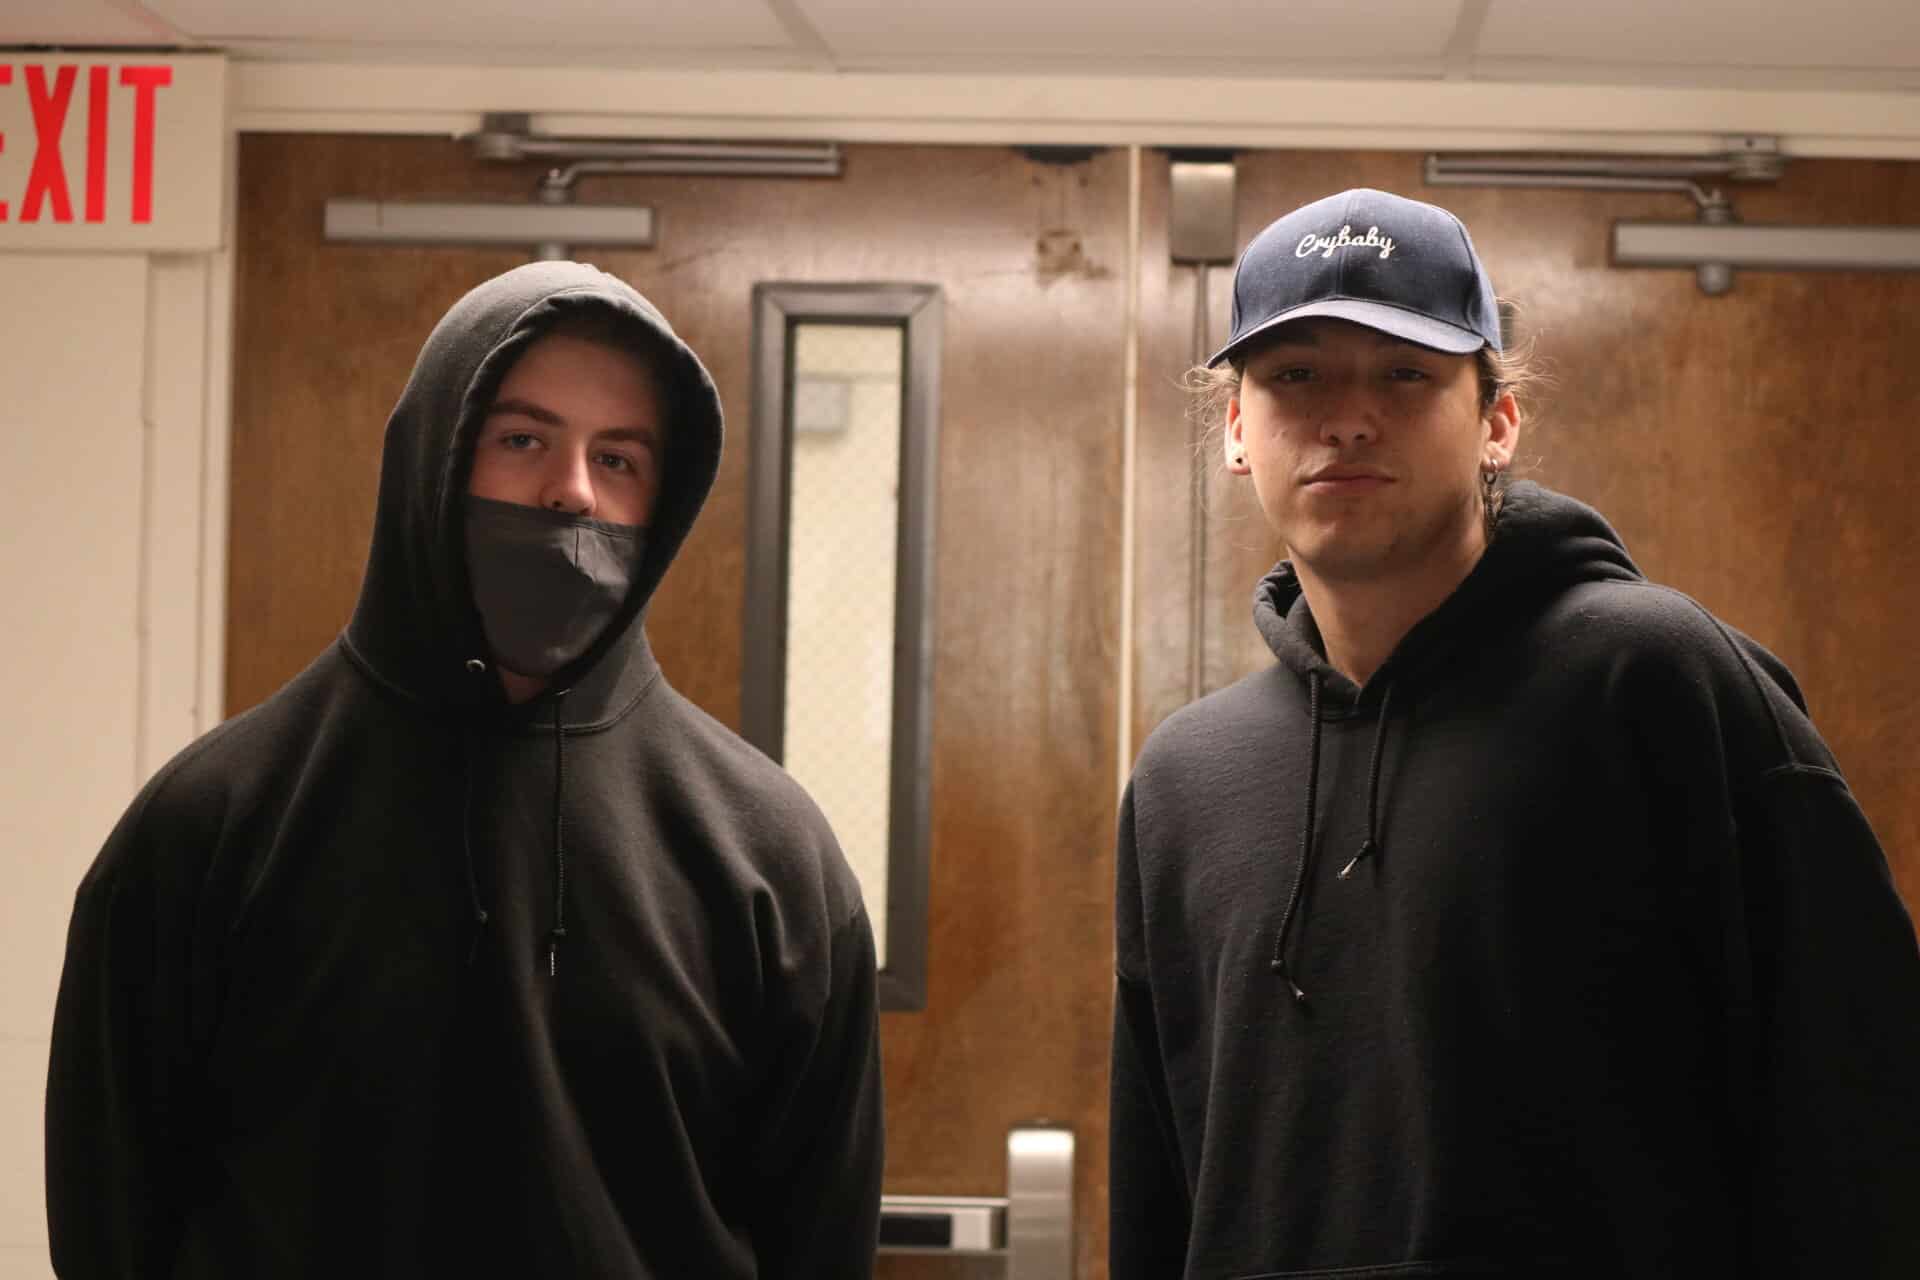 Chase Bridges, senior digital media major and Hagen pose in their black hoodies.